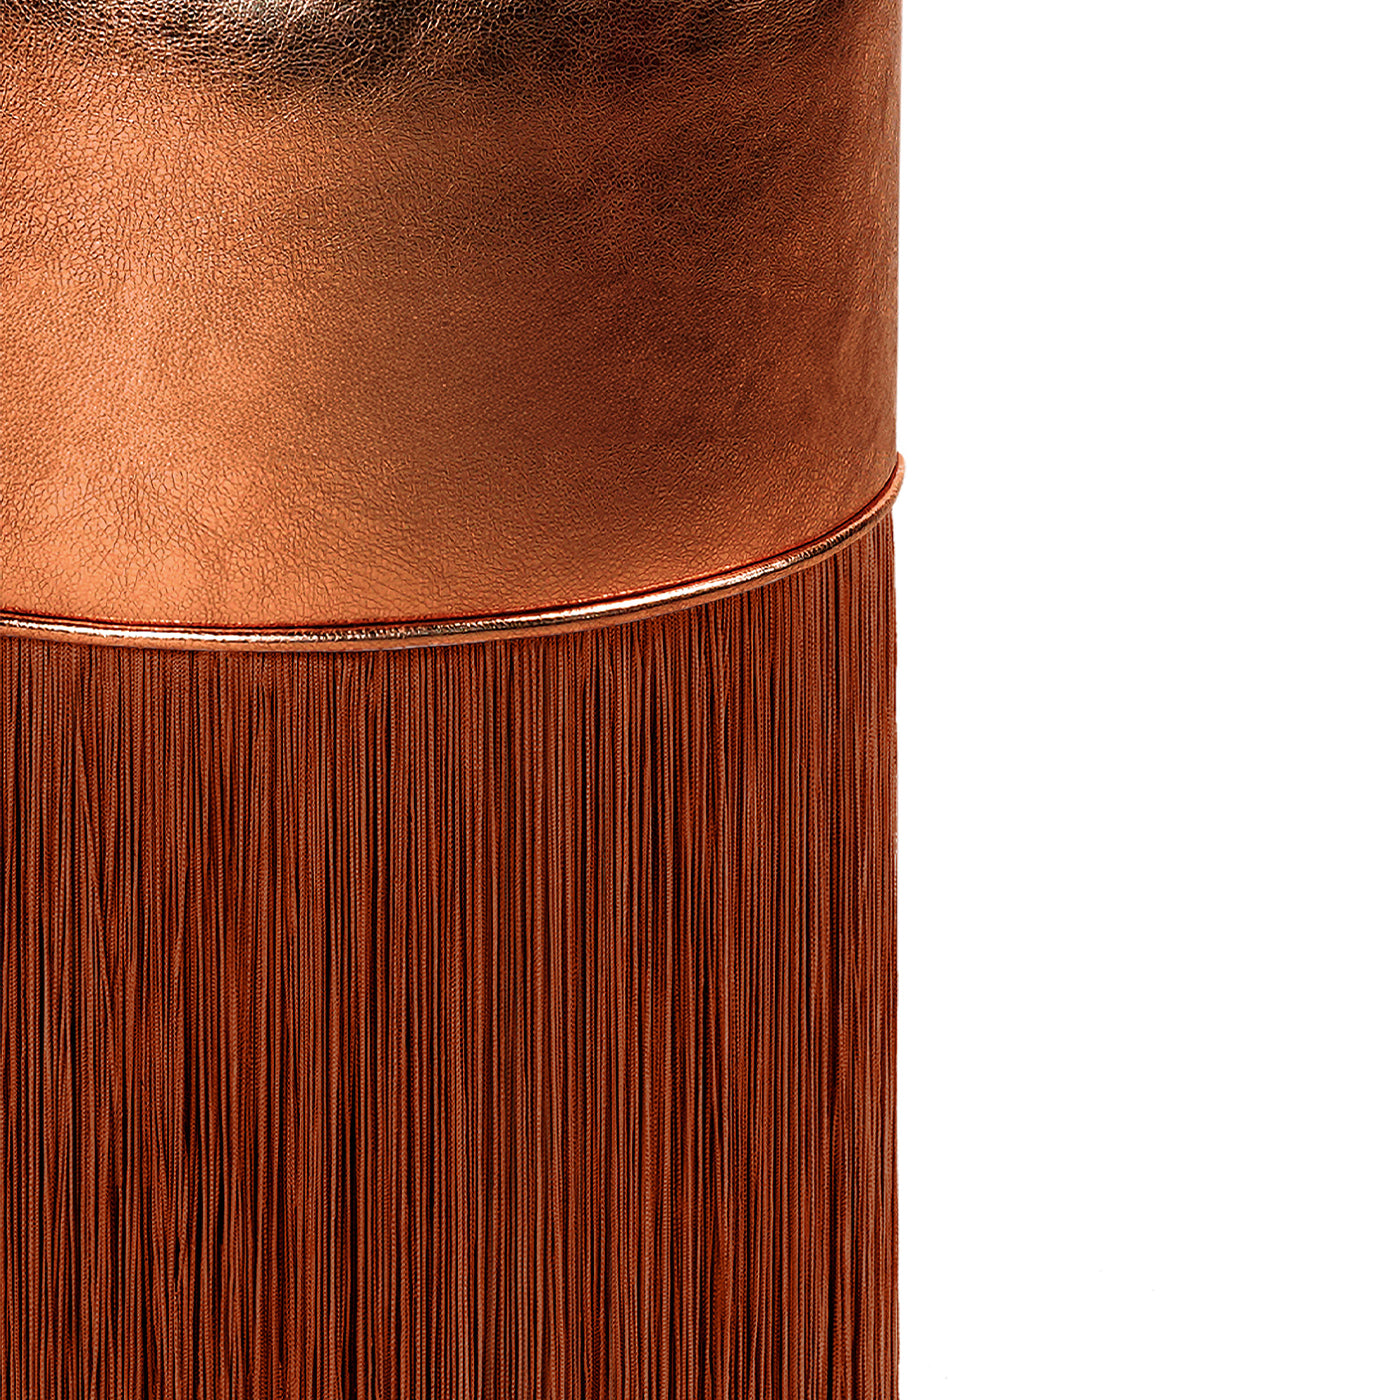 Gleaming Copper Metallic Leather Pouf by Lorenza Bozzoli - Alternative view 1